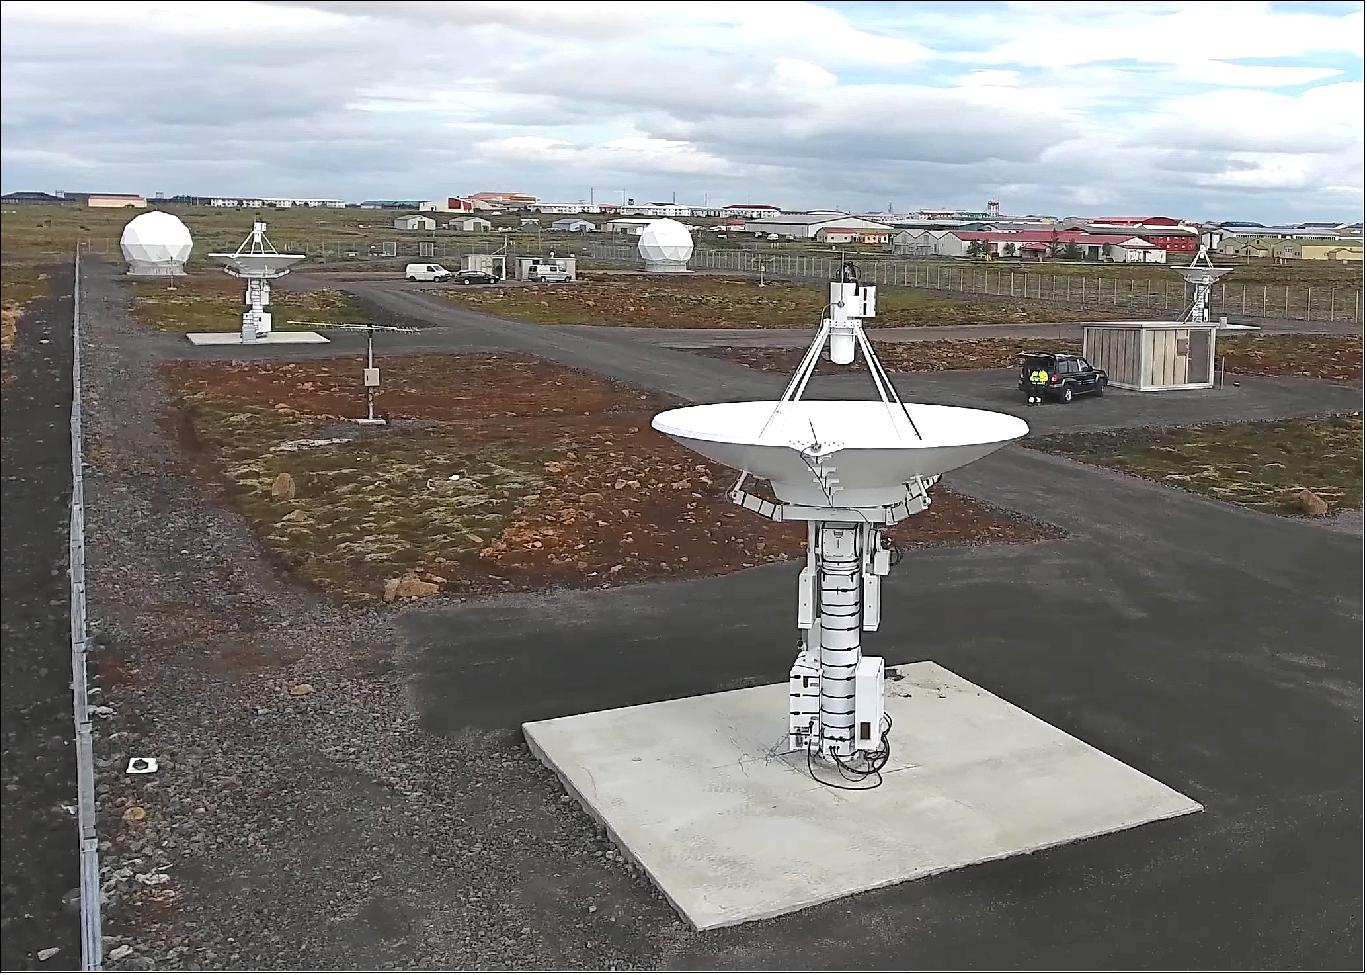 Figure 60: A 4.5 m diameter ground station antenna at Keflavik, Iceland (image credit: Planet Labs)